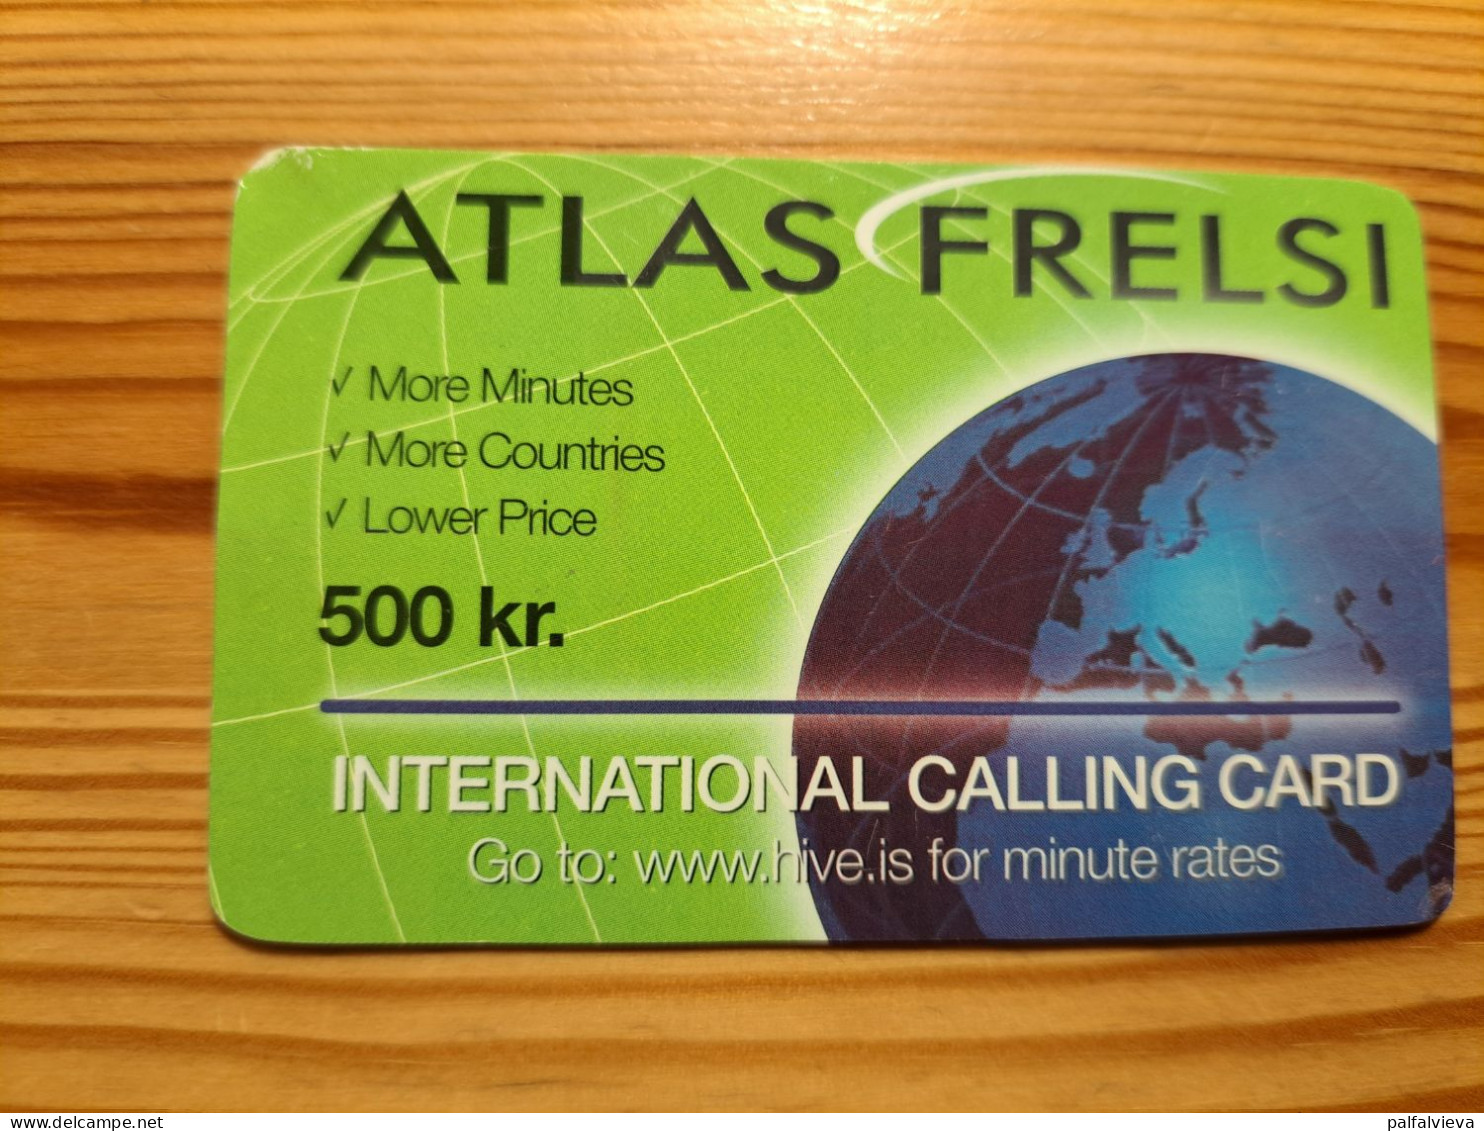 Prepaid Phonecard Iceland, Hive - Atlas Frelsi - Islandia